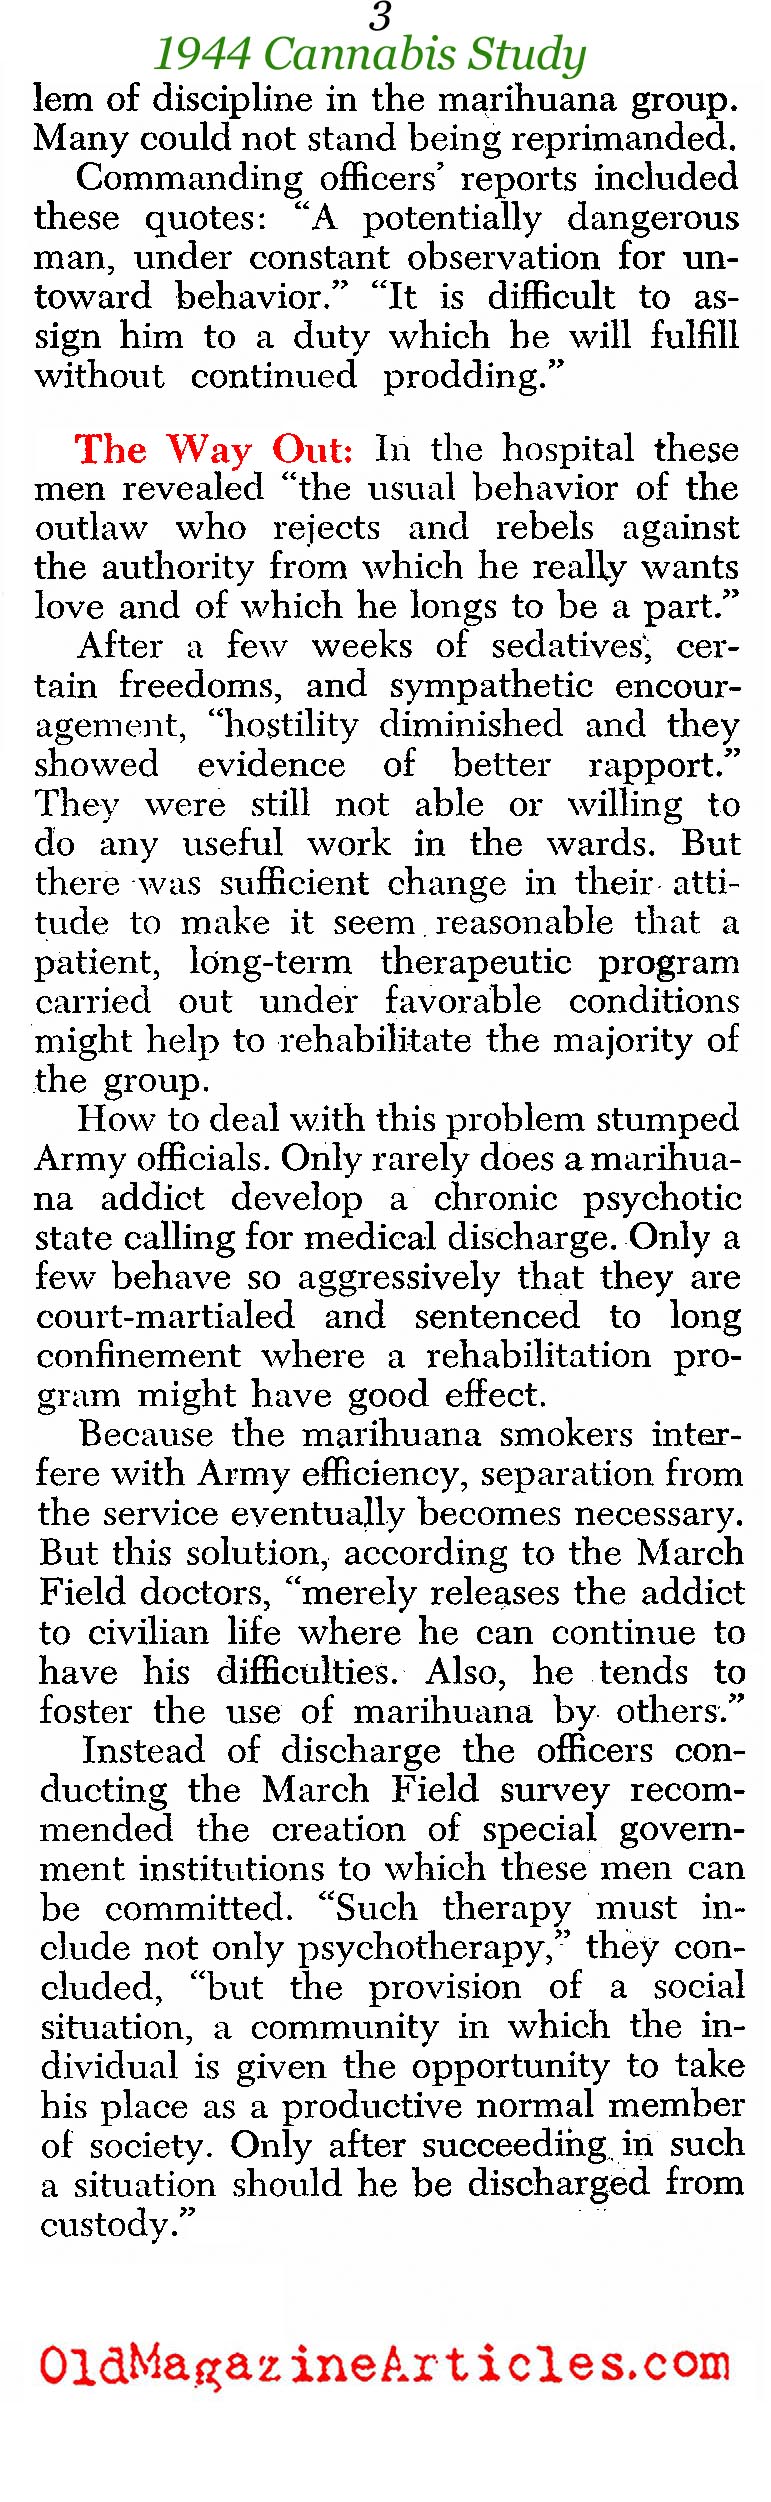 The U.S. Army's Cannabis Study (Newesweek Magazine, 1945)